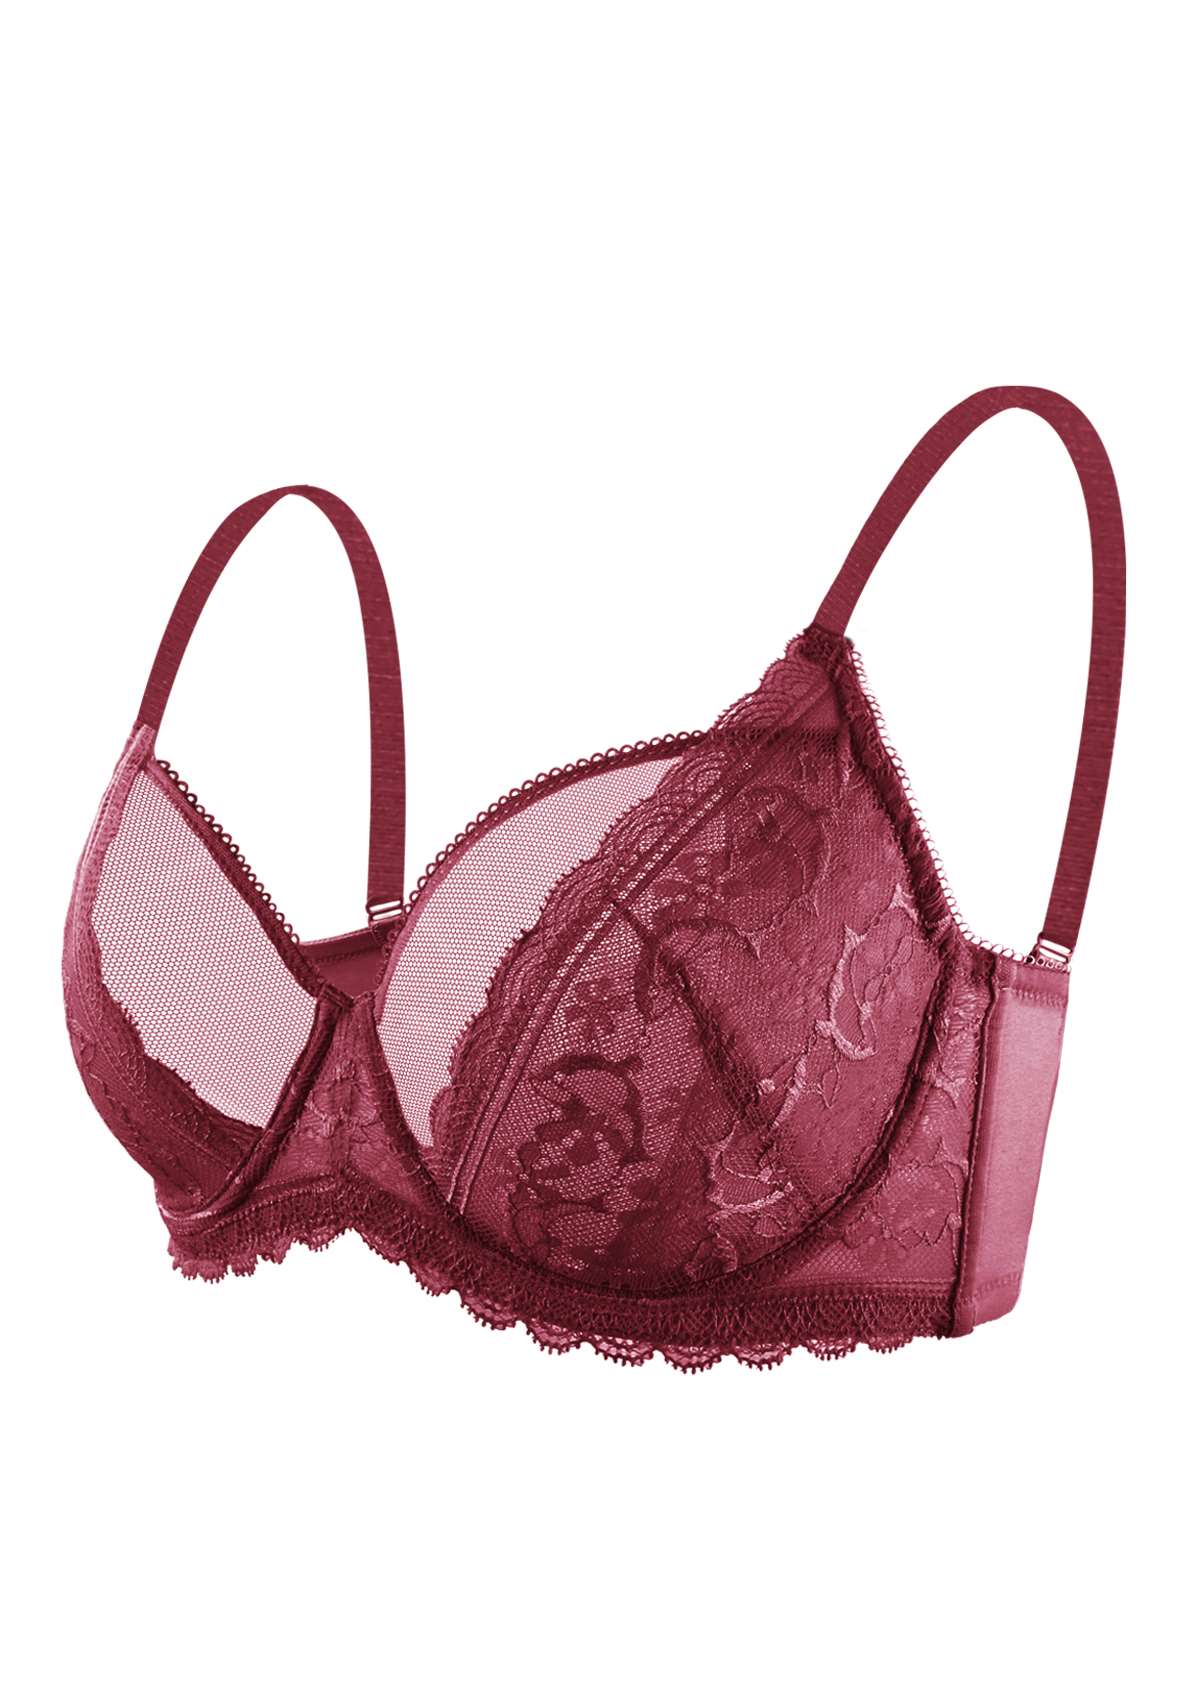 HSIA Anemone Sexy Lace Bra Panty Set: Thick Strap Bra - Burgundy / 34 / DDD/F